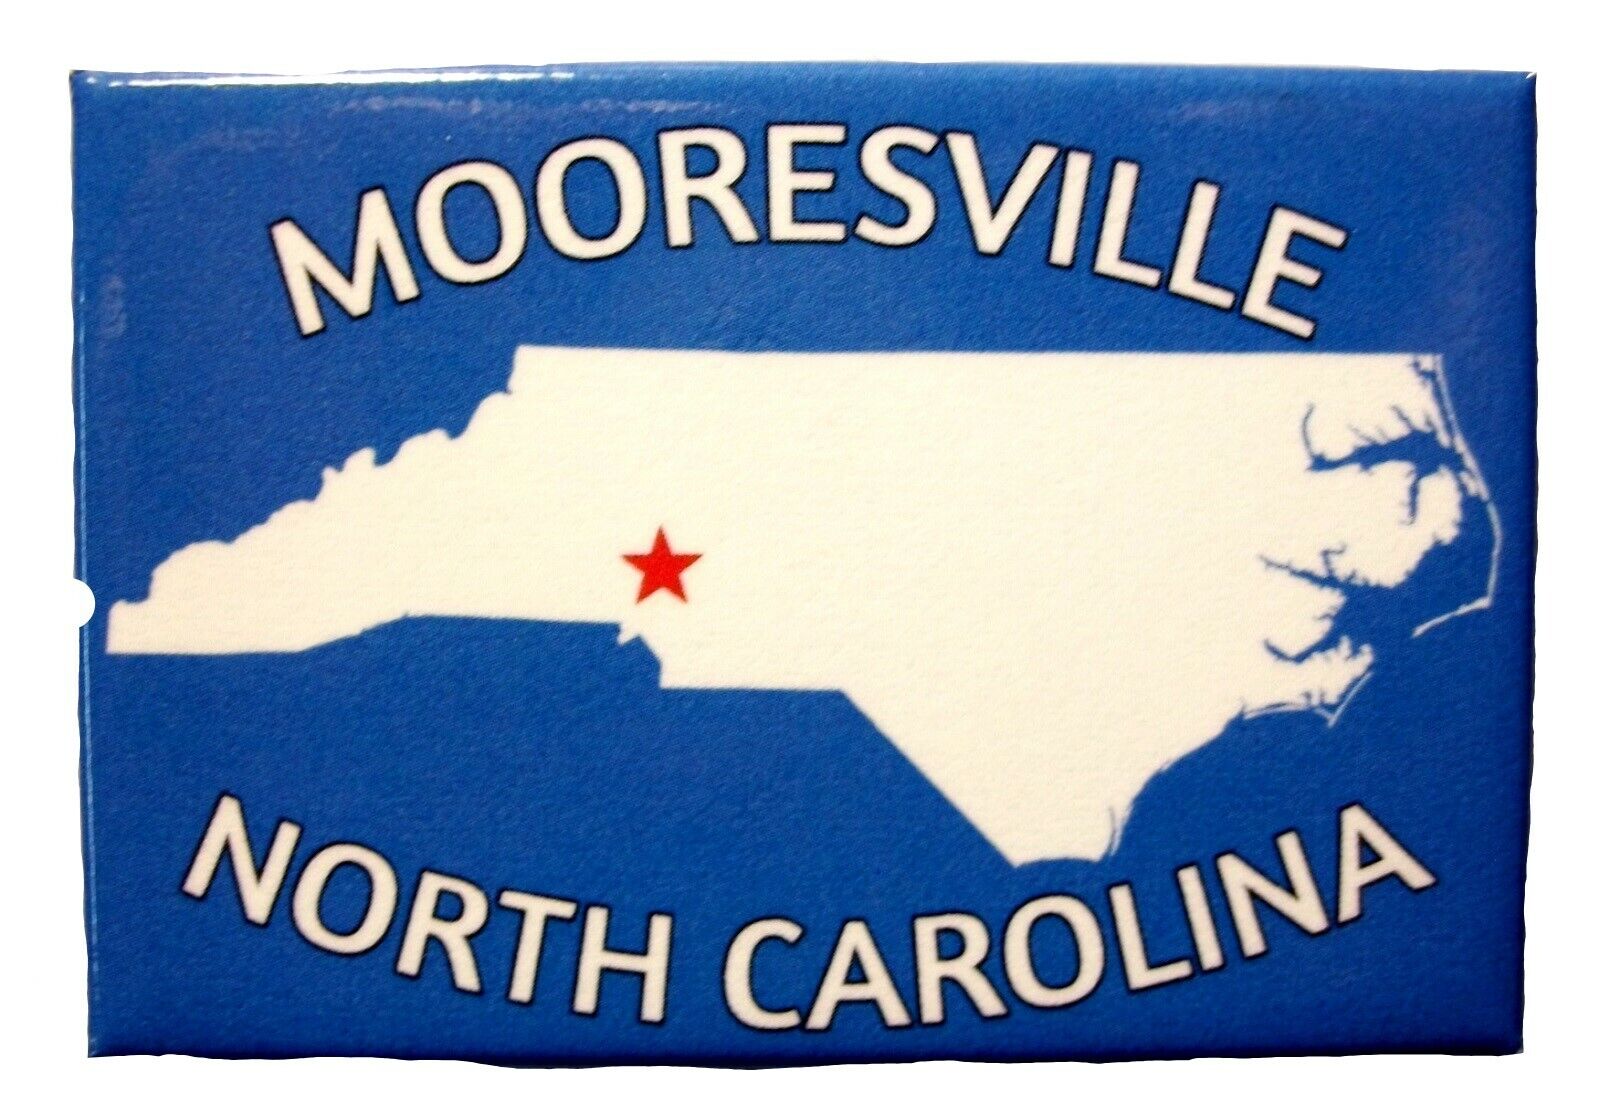 Mooresville North Carolina Blue Fridge Magnet